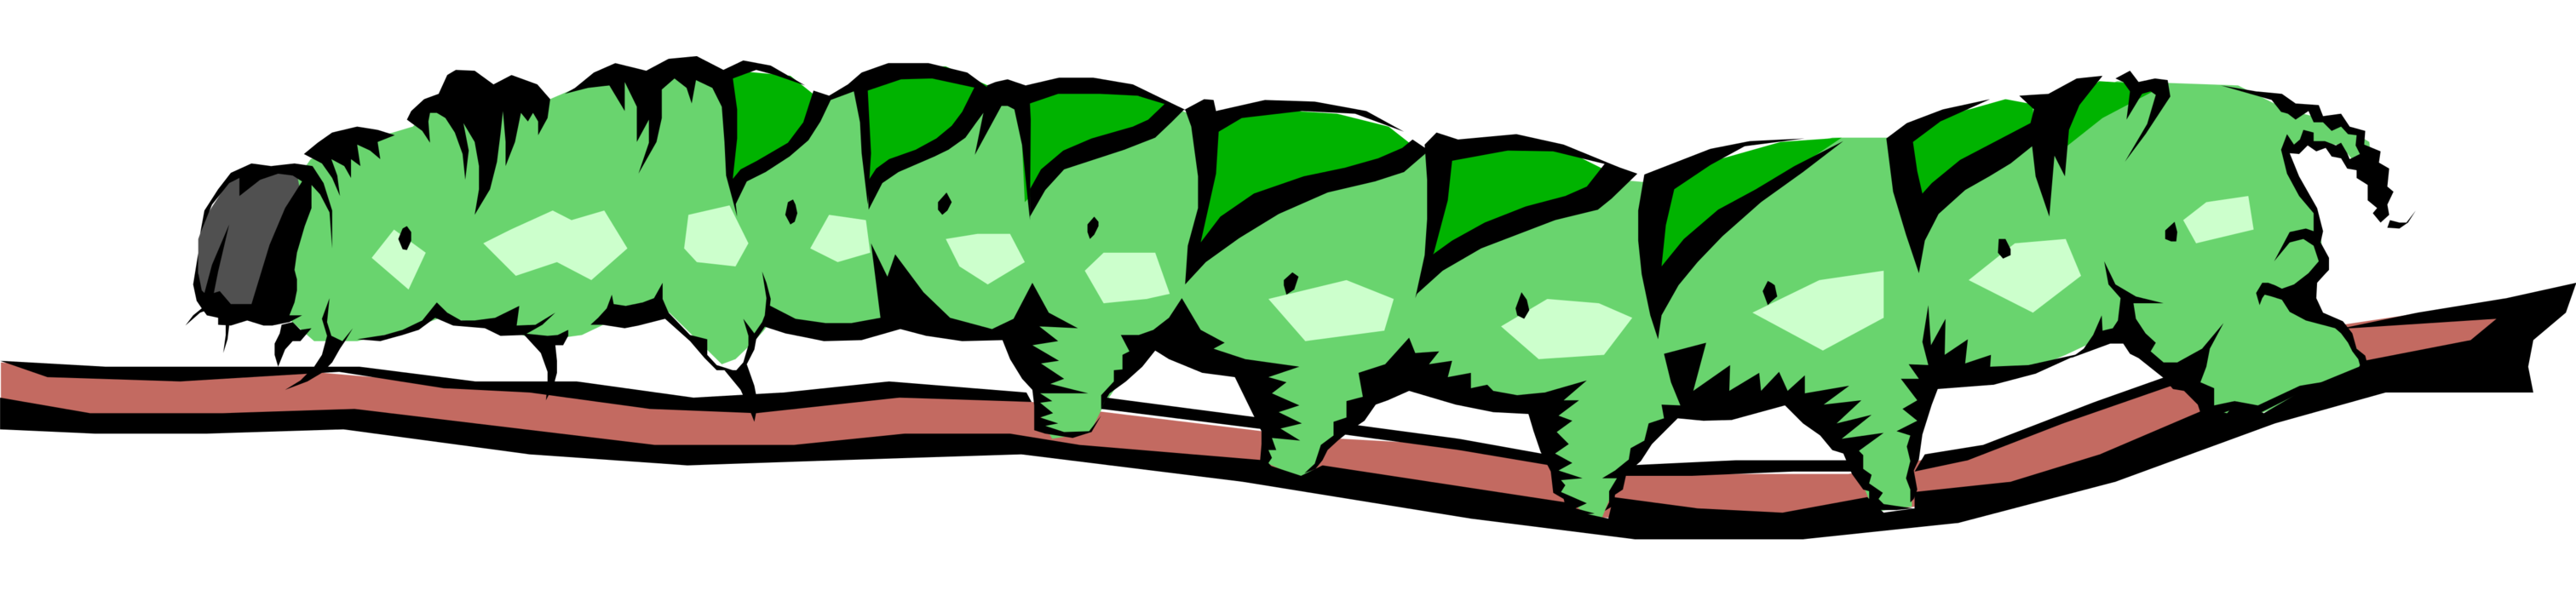 Vector Illustration of Green Caterpillar Insect Crawls Along Branch